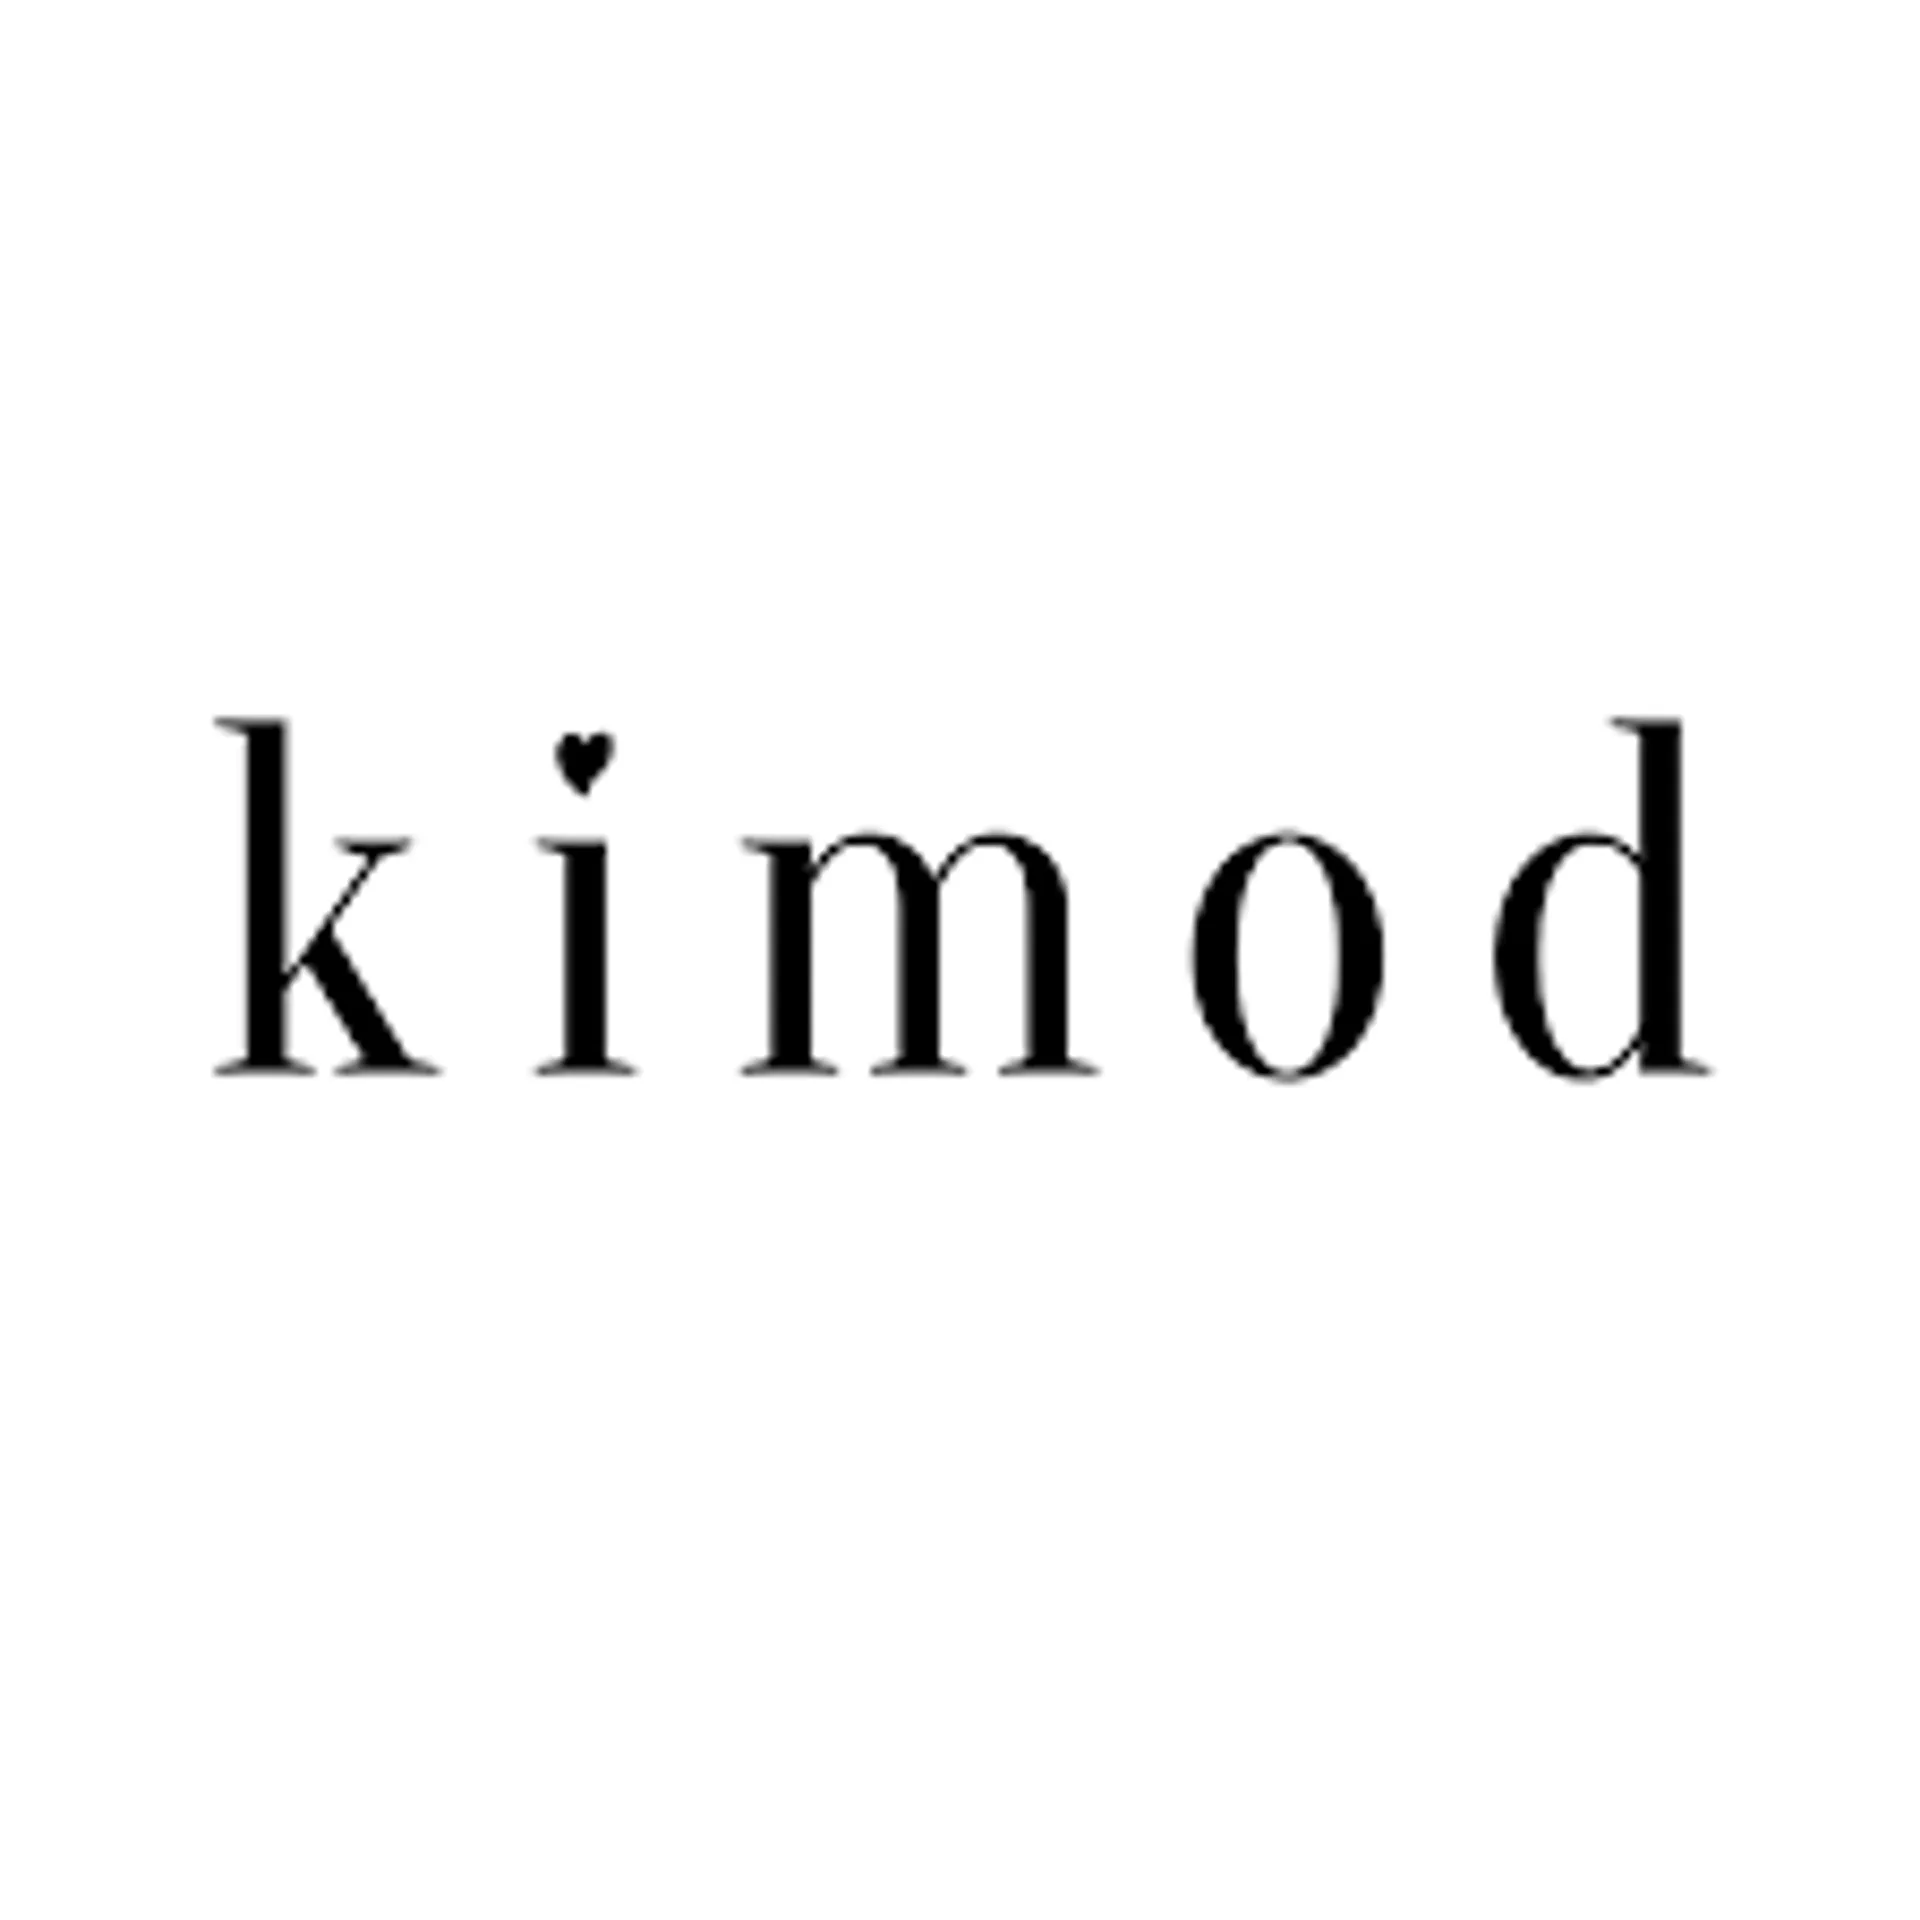 KIMOD logo